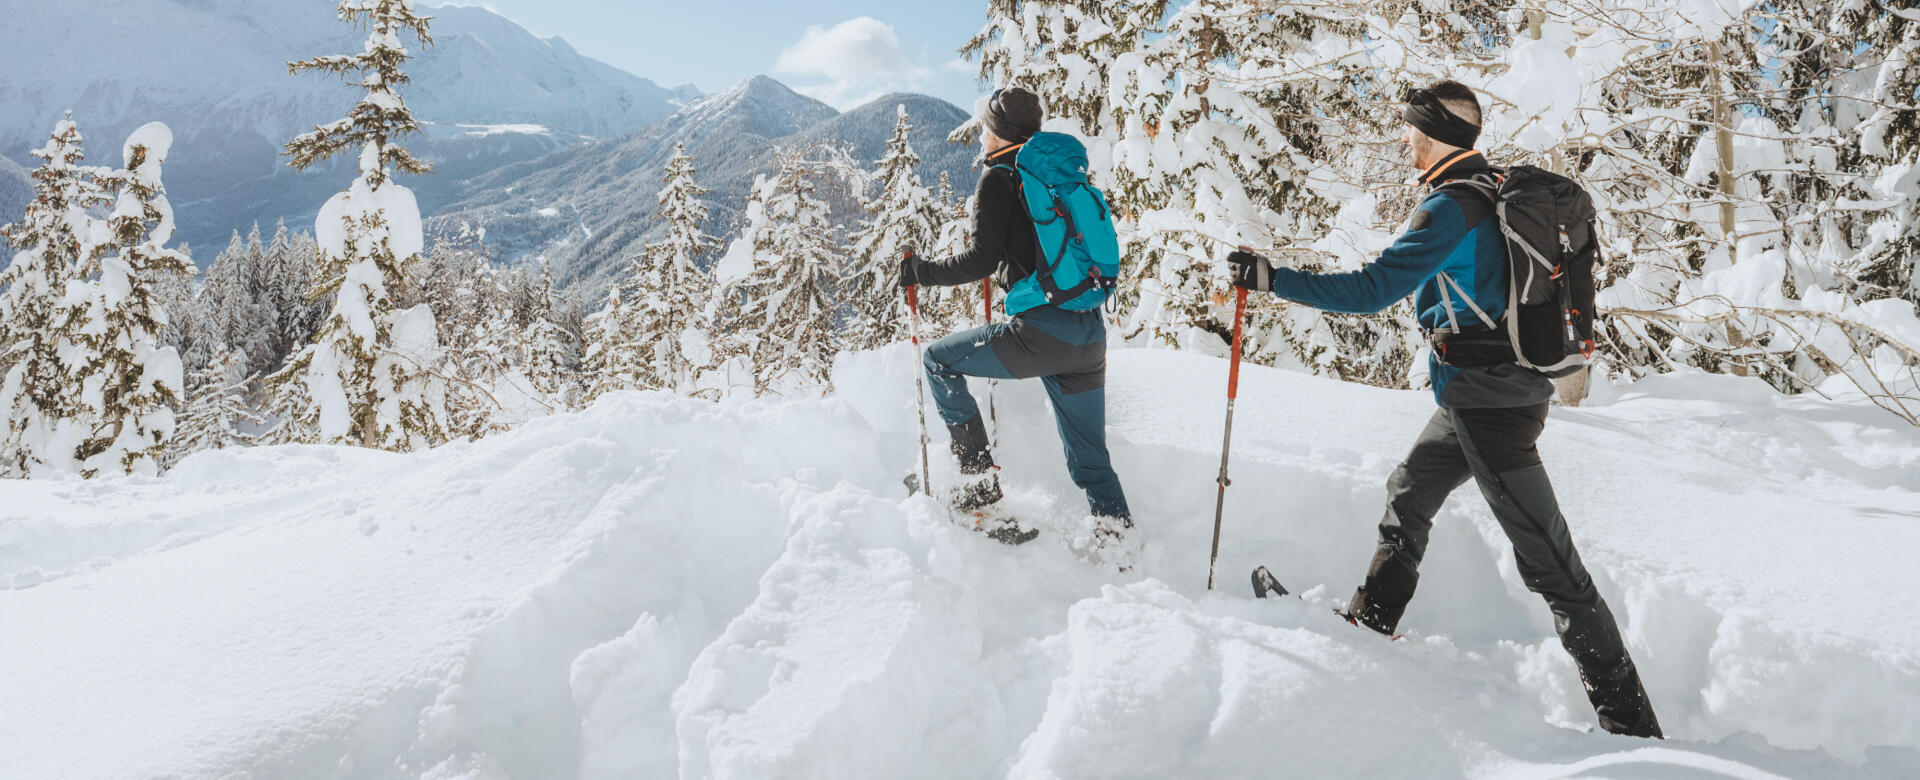 Choosing your snowshoe hiking equipment - teaser